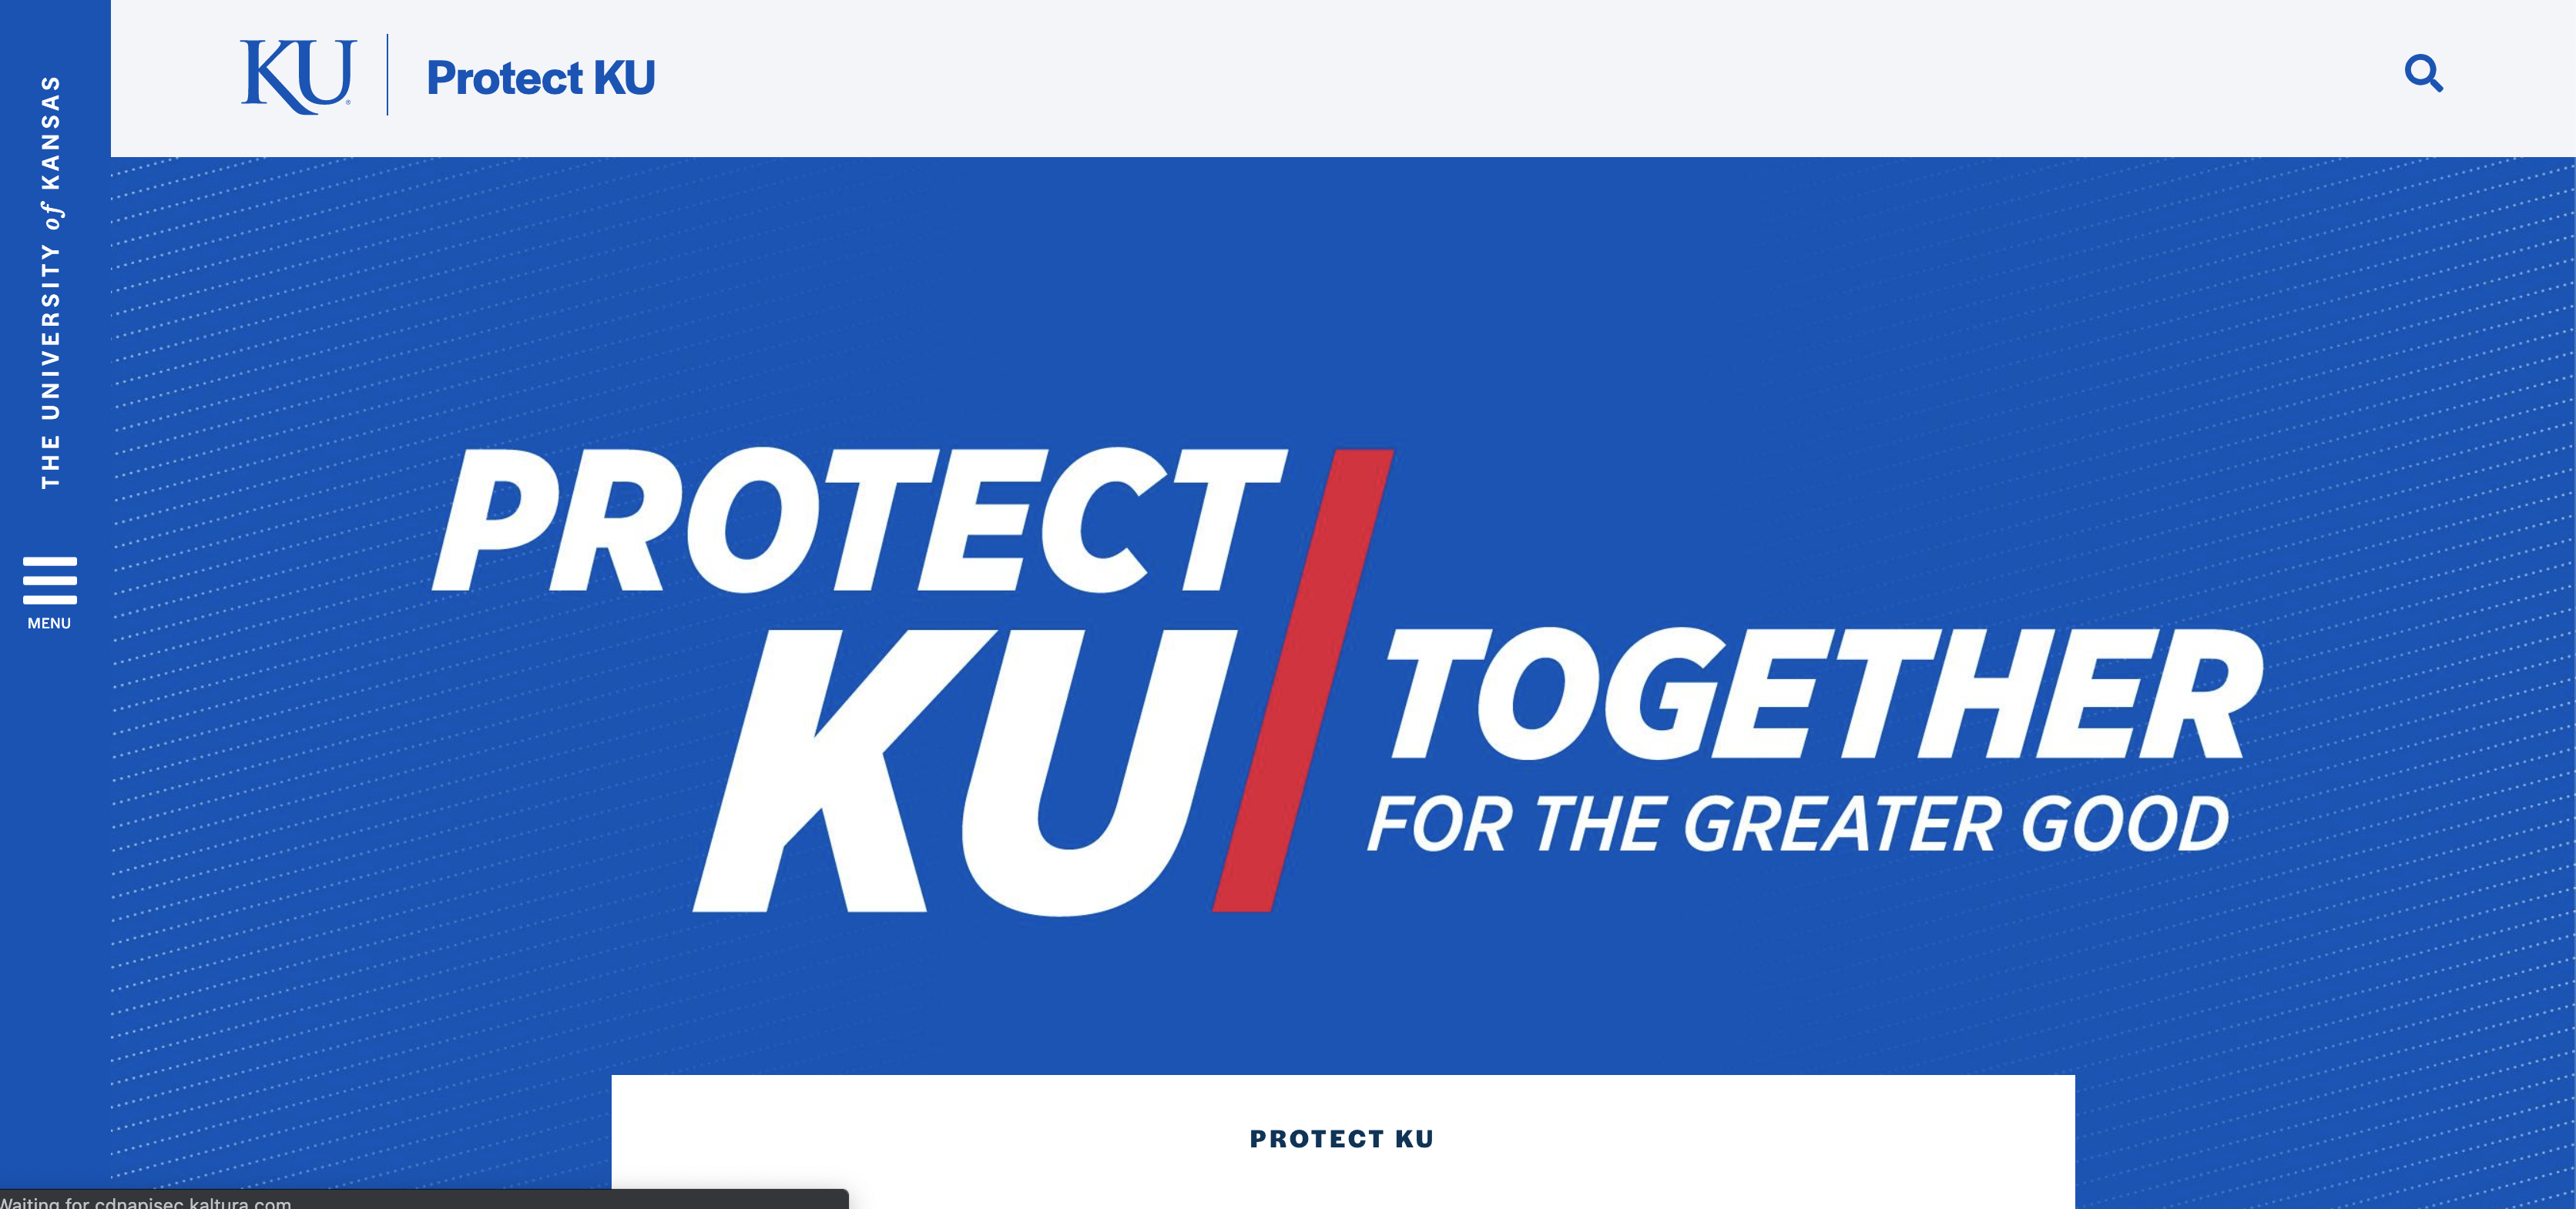 Image of Protect KU webpage